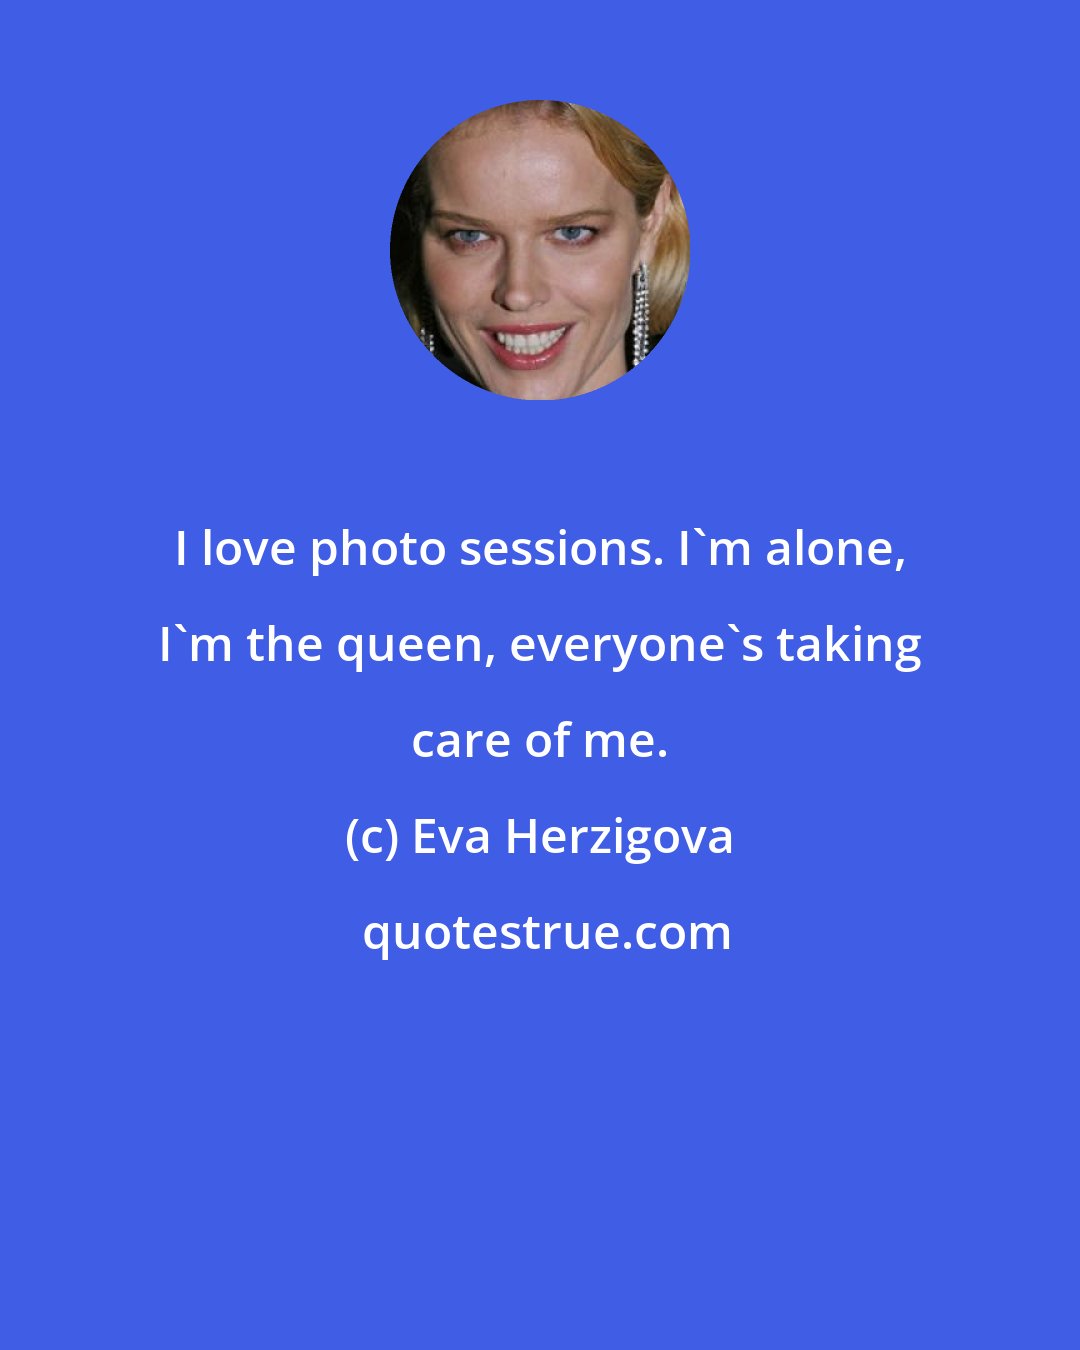 Eva Herzigova: I love photo sessions. I'm alone, I'm the queen, everyone's taking care of me.